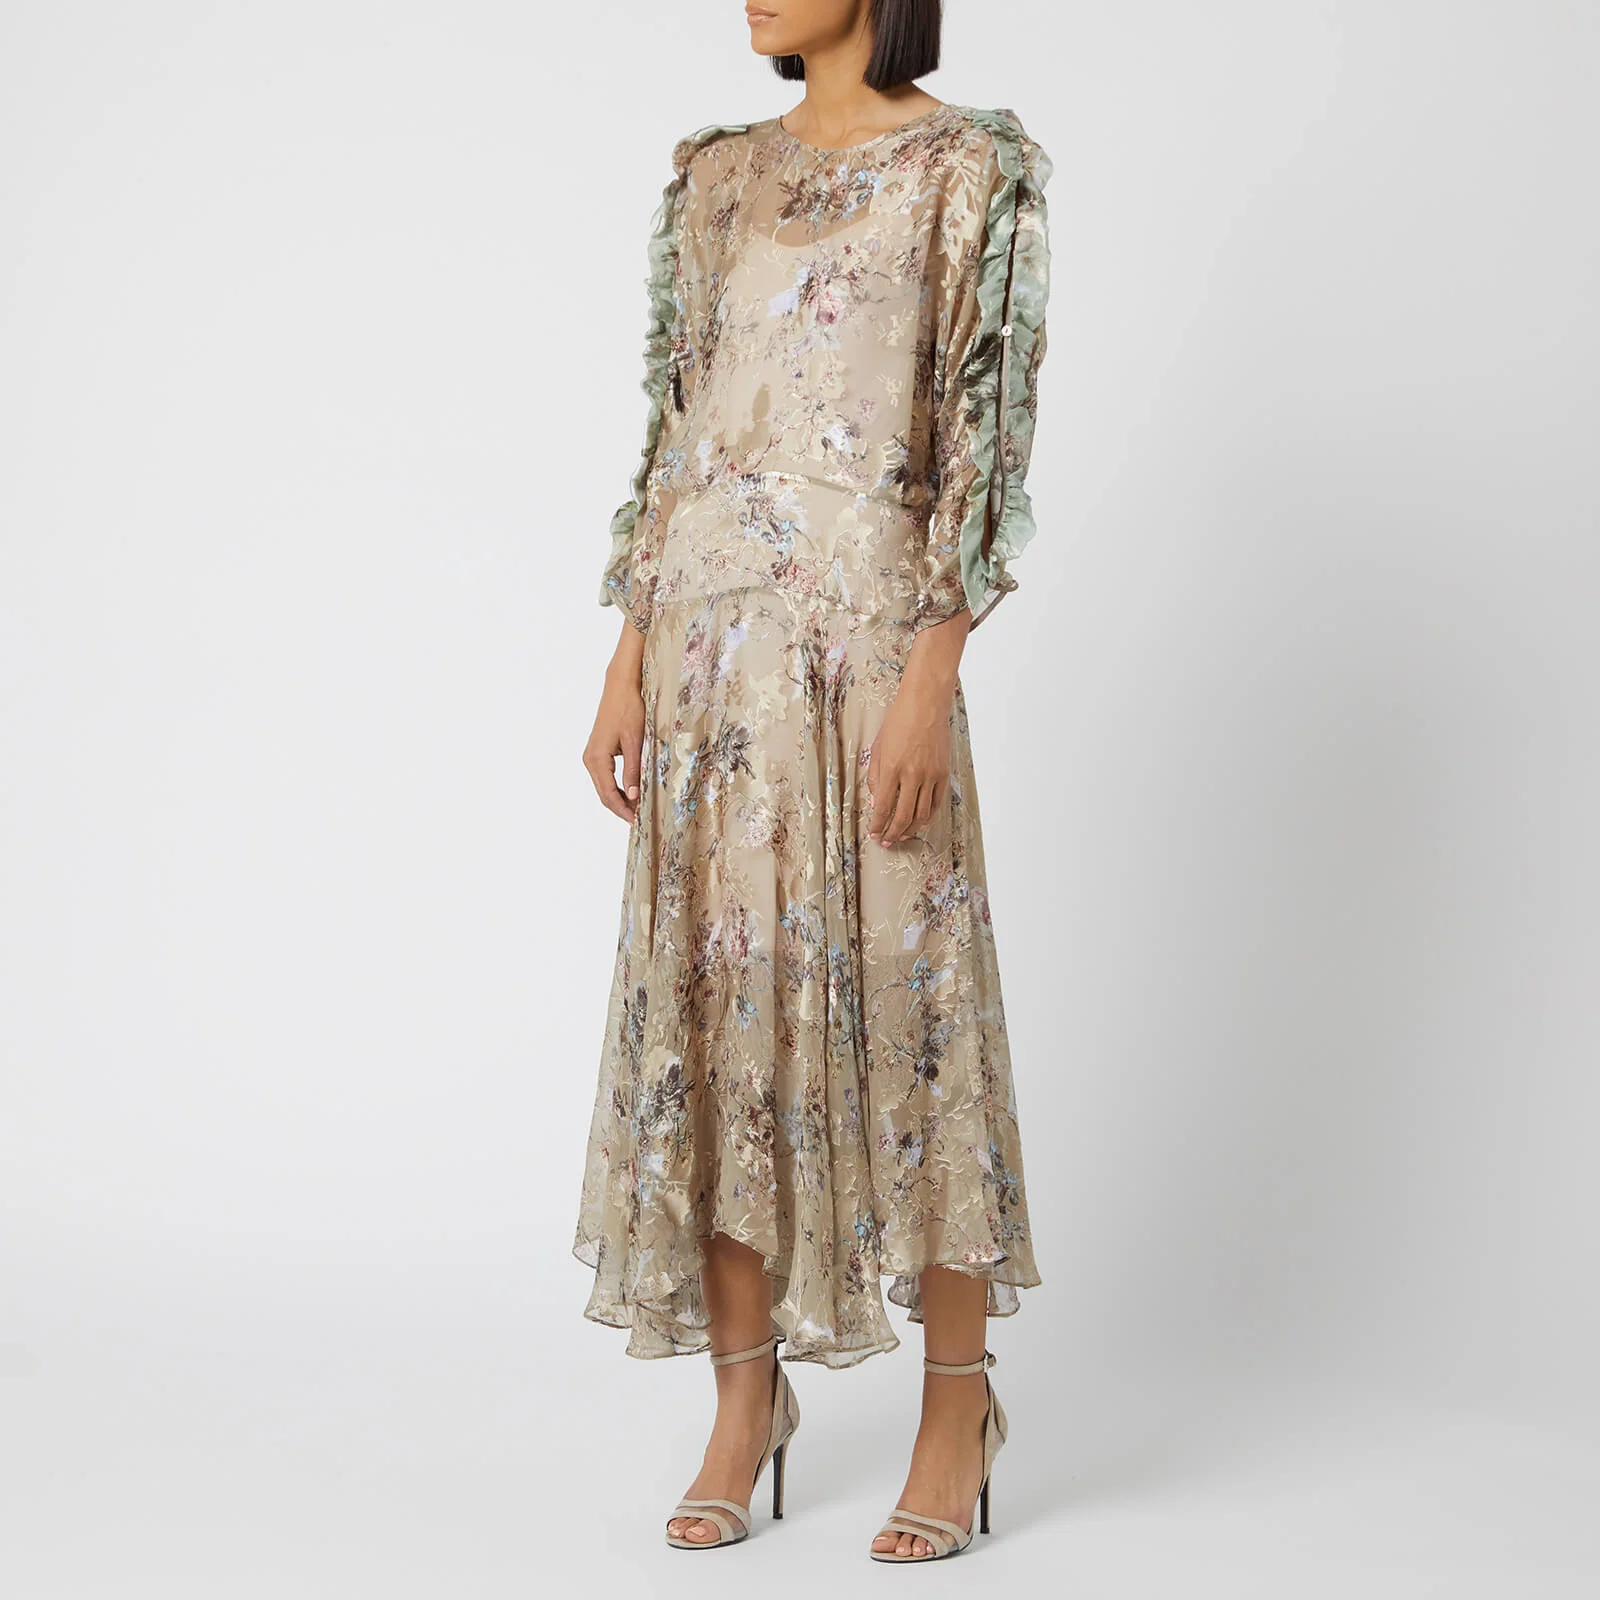 Preen By Thornton Bregazzi Women's Satin Devore Scarlett Dress - Stone Gypsy Floral Image 1